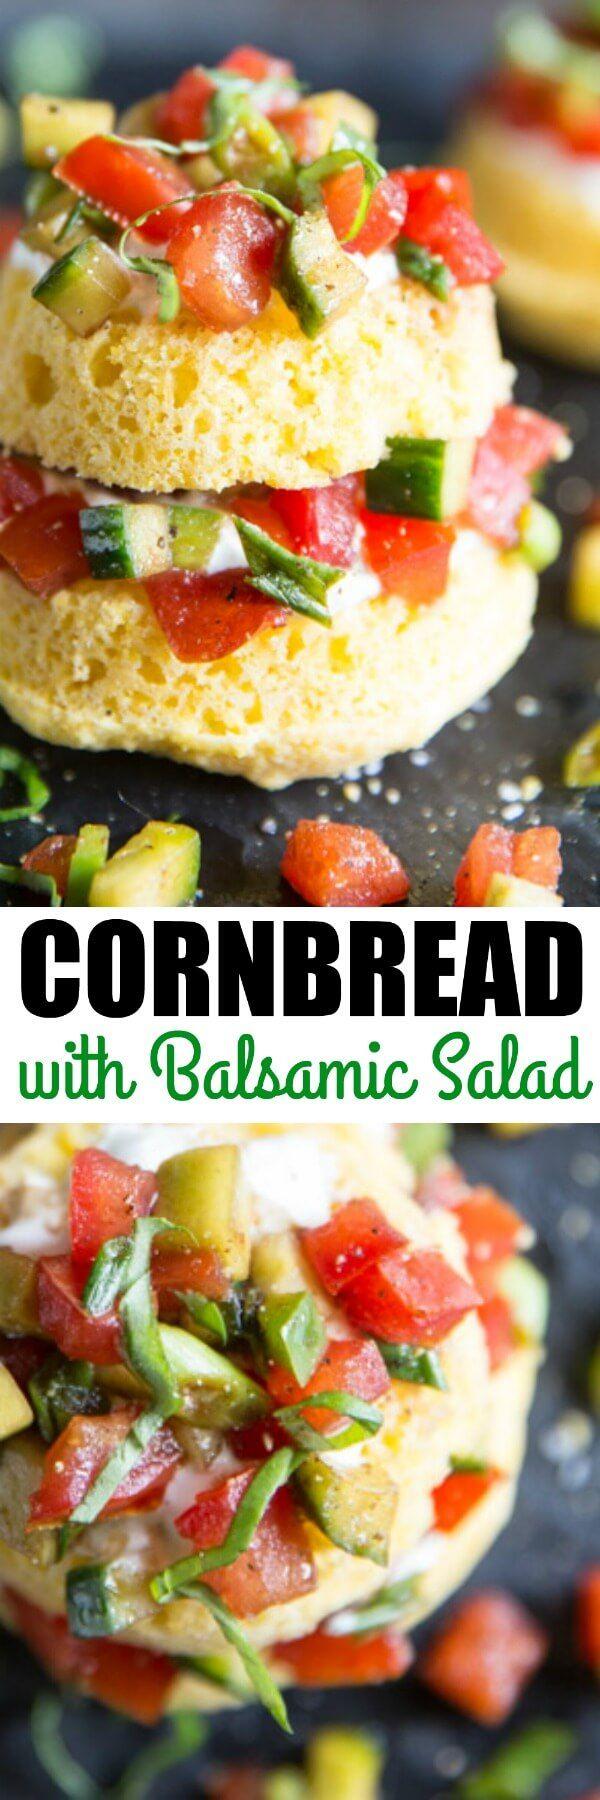 Hochzeit - Cornbread Cakes With Balsamic Tomato Salad